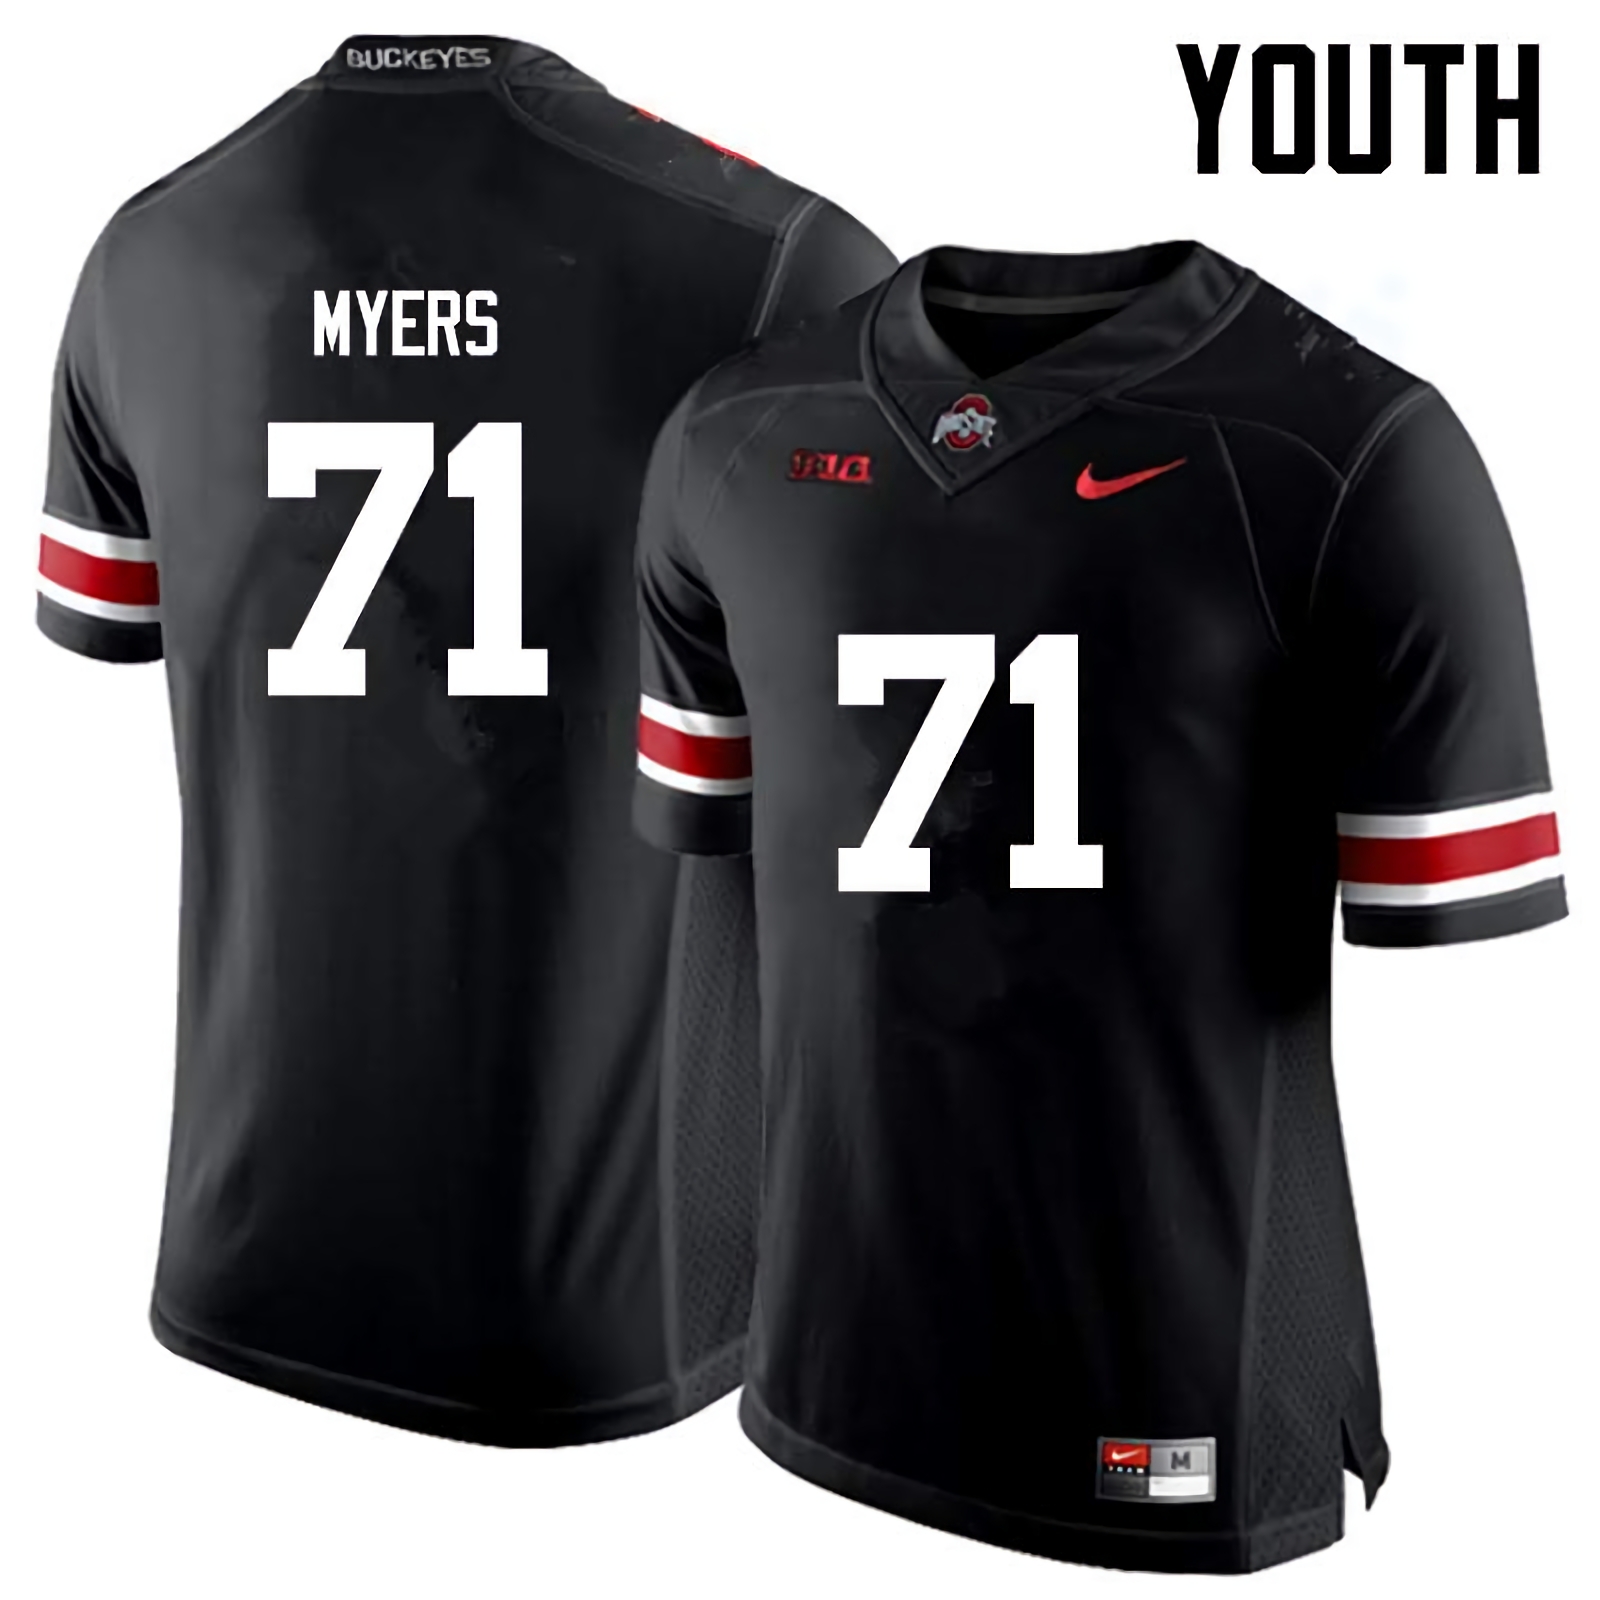 Josh Myers Ohio State Buckeyes Youth NCAA #71 Nike Black College Stitched Football Jersey LZS7856XG